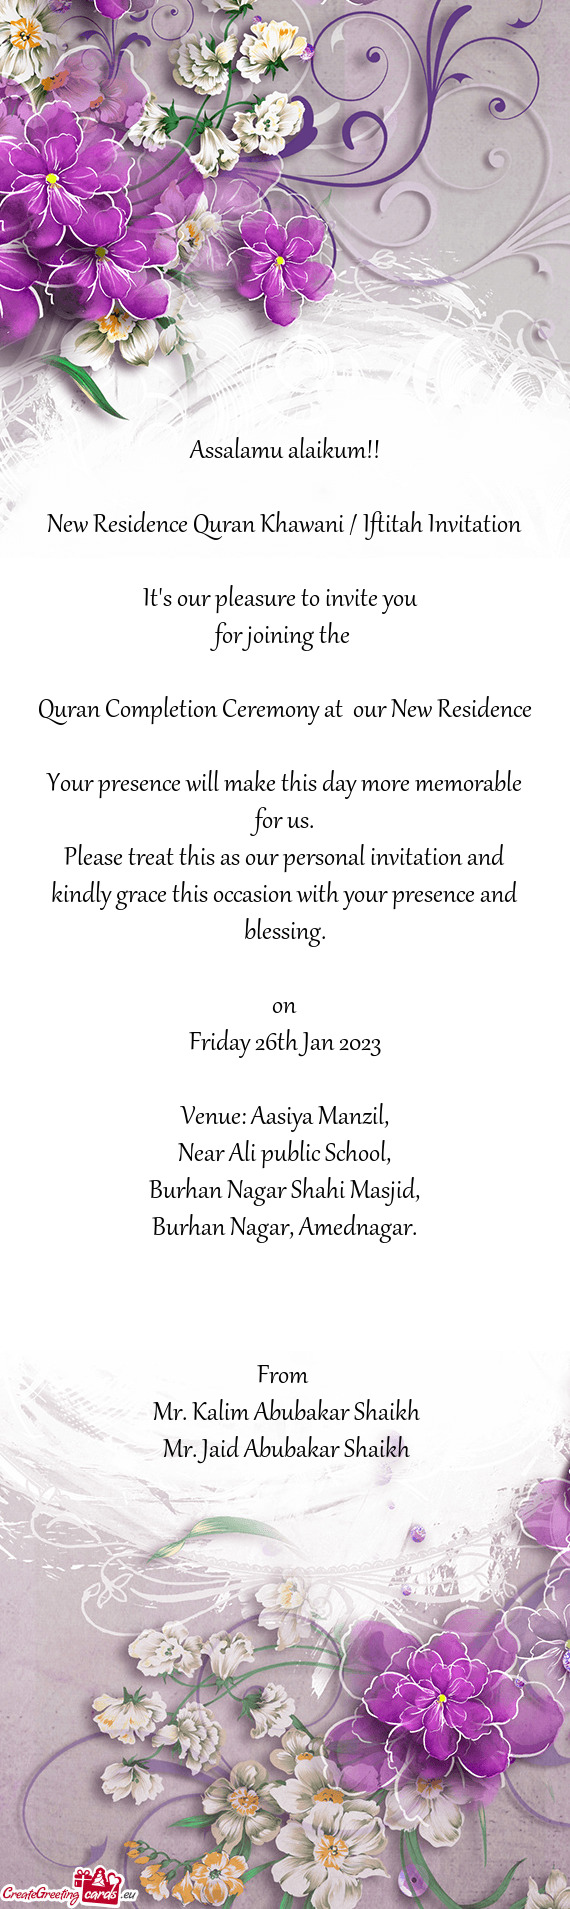 New Residence Quran Khawani / Iftitah Invitation